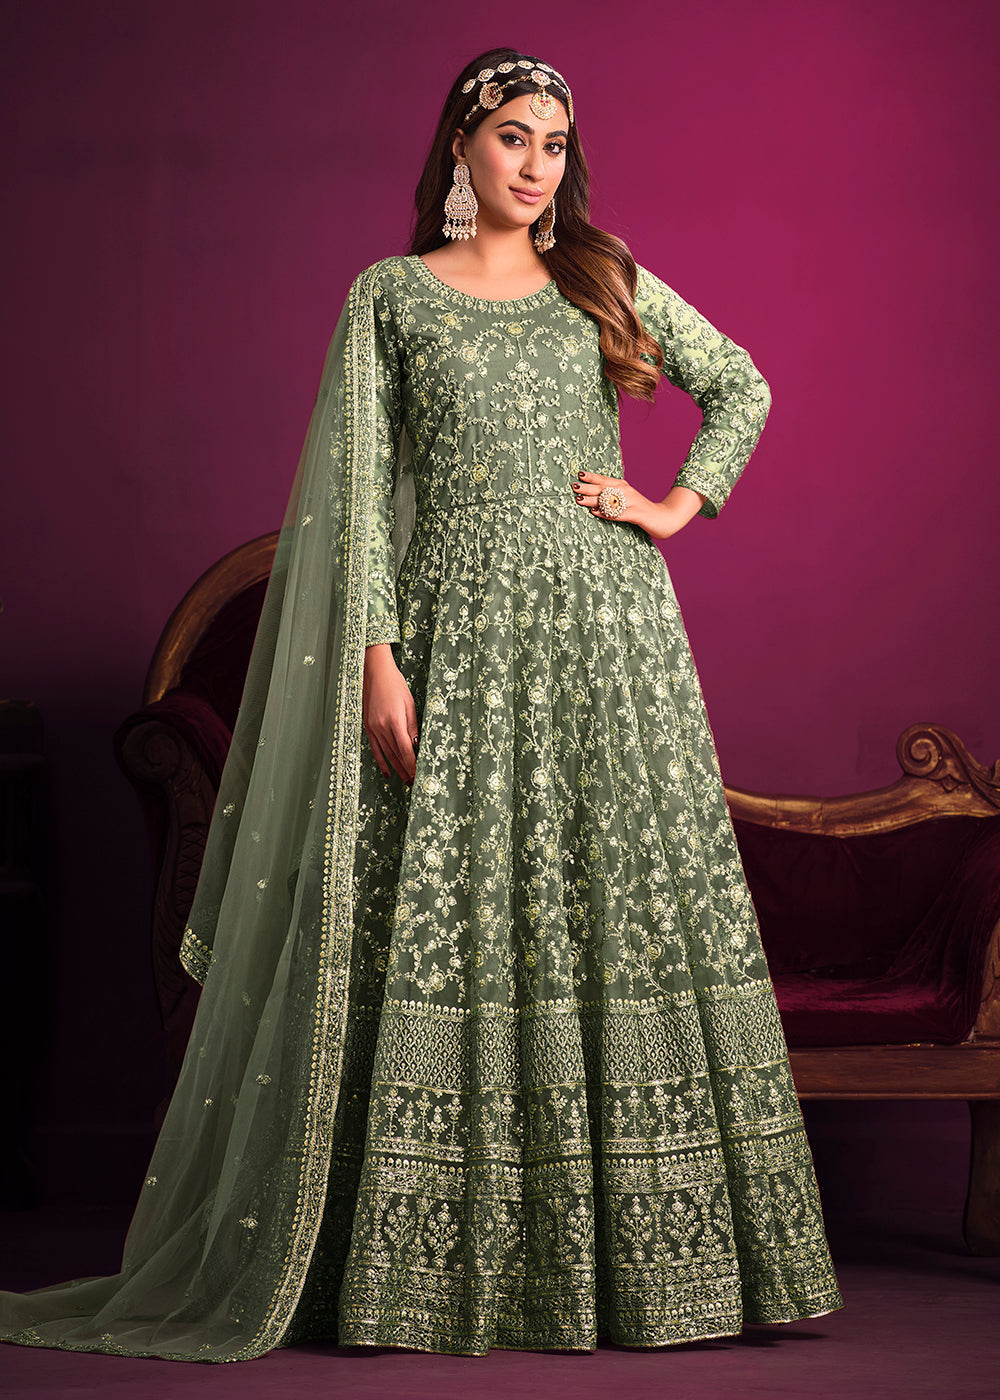 Kimaaya | Anarkali dress pattern, Long dress design, Cotton anarkali dress